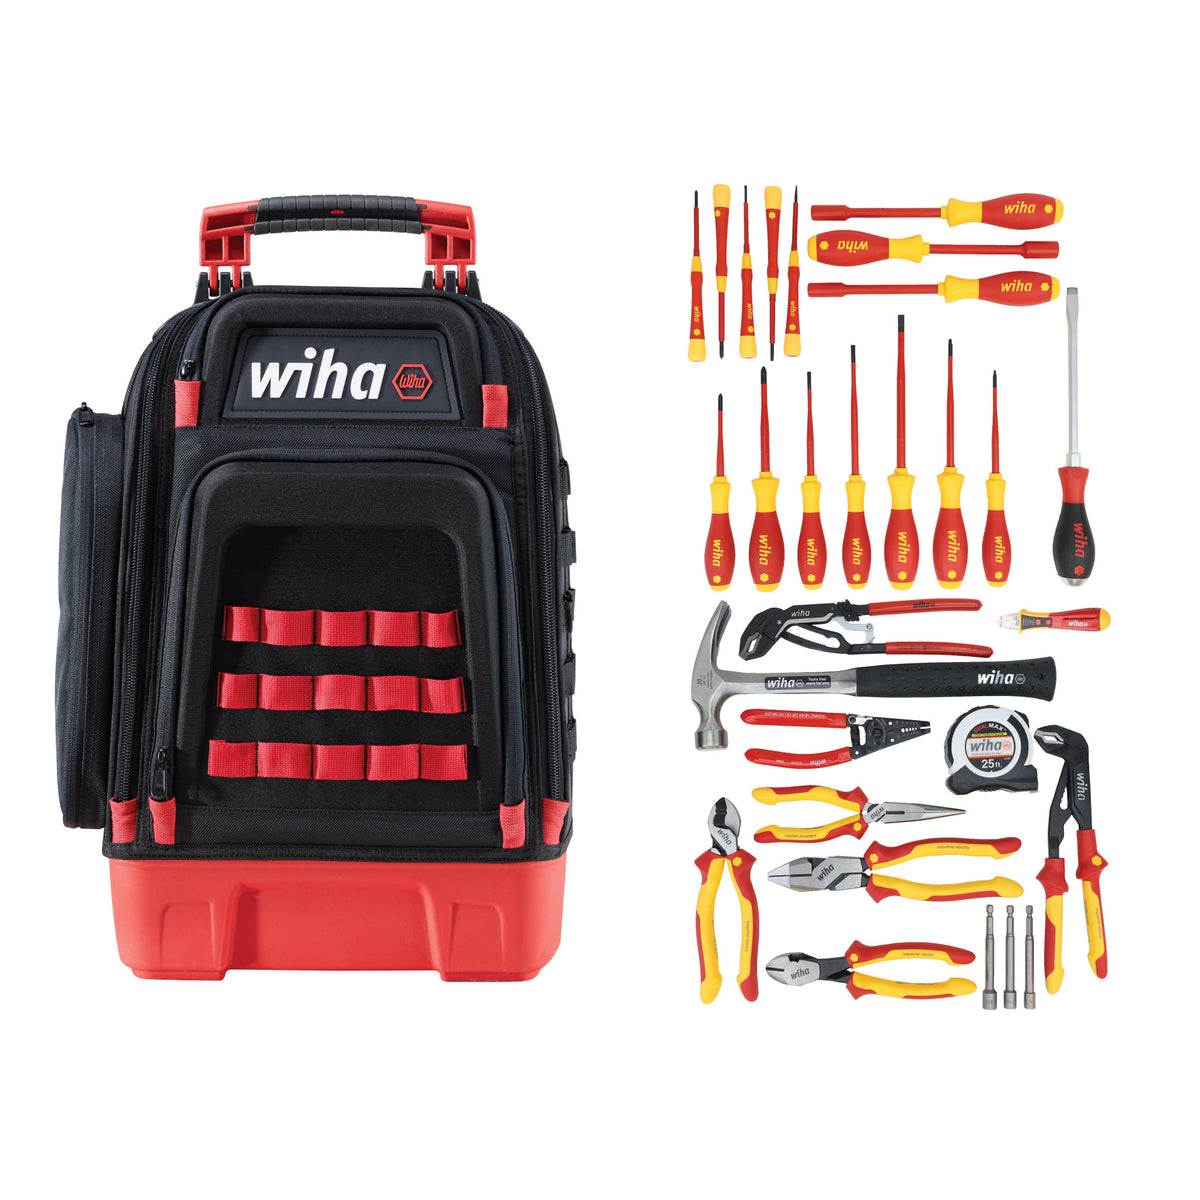 Wiha 91871 30 Piece Journeyman Electrician's Insulated Tool Kit in Heavy Duty Backpack